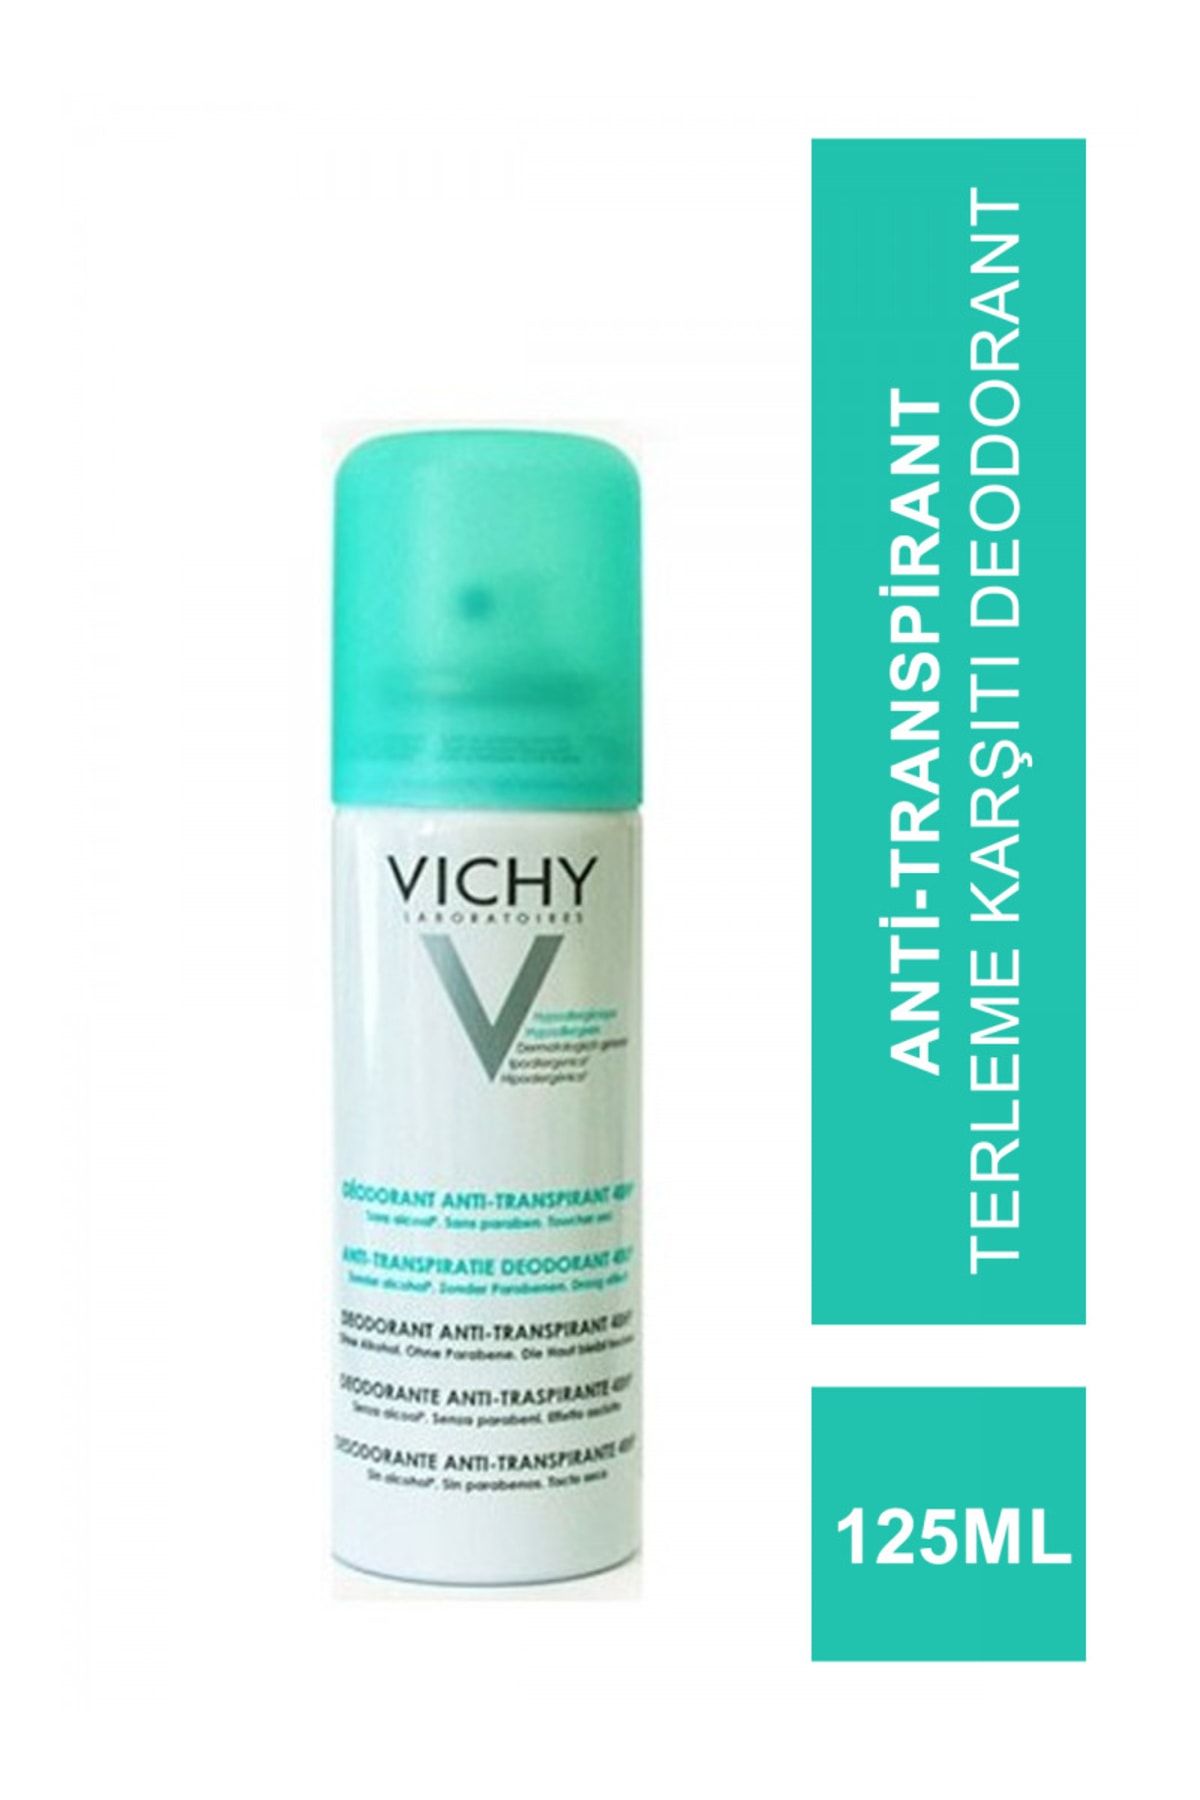 Vichy Deo Anti-transpirant-terleme Karşıtı Deodorant 125ml